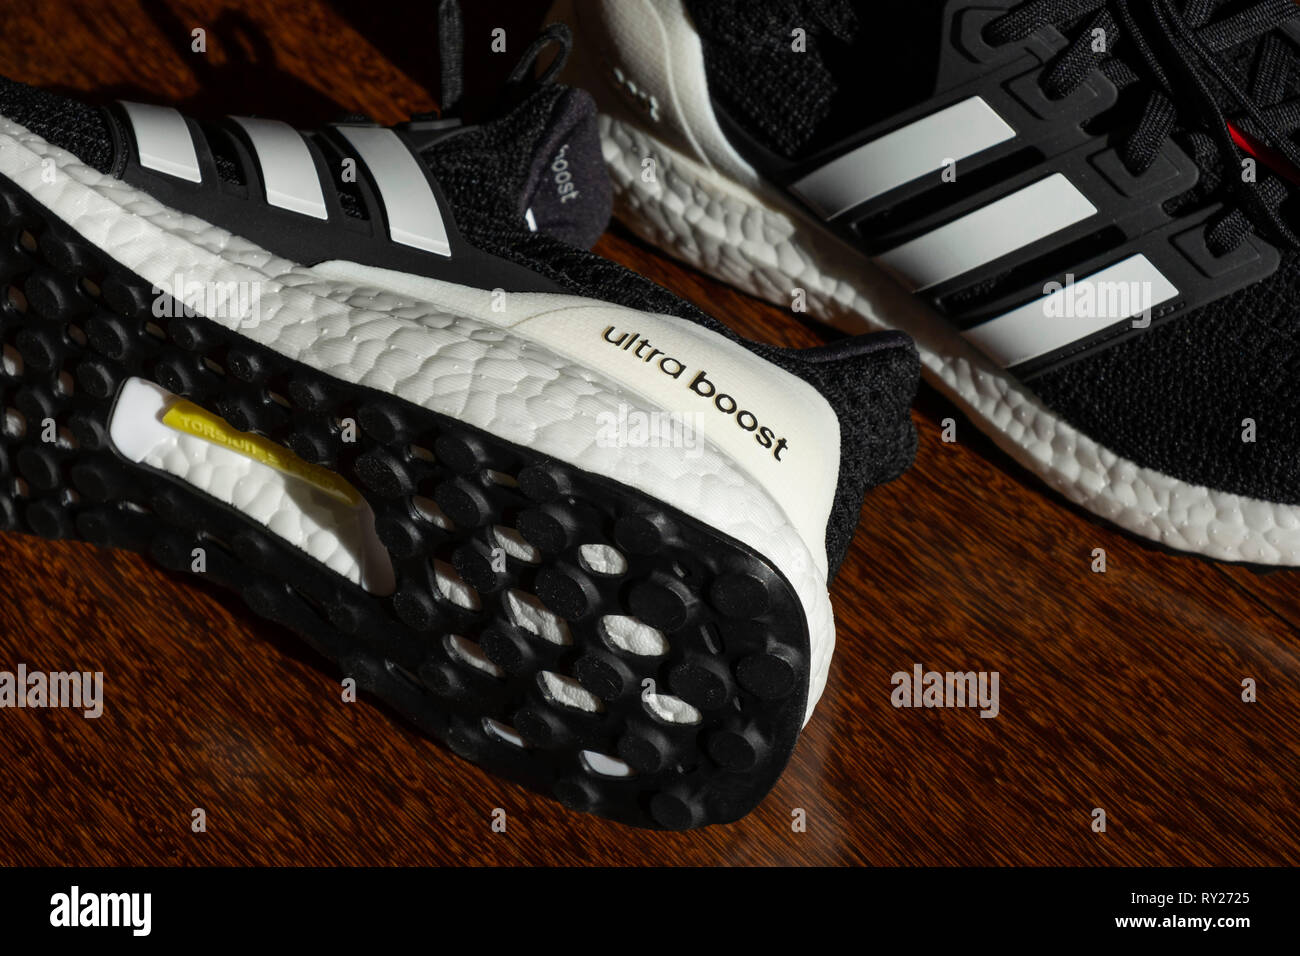 Black Adidas Ultraboost running shoes on hardwood floor Stock Photo - Alamy